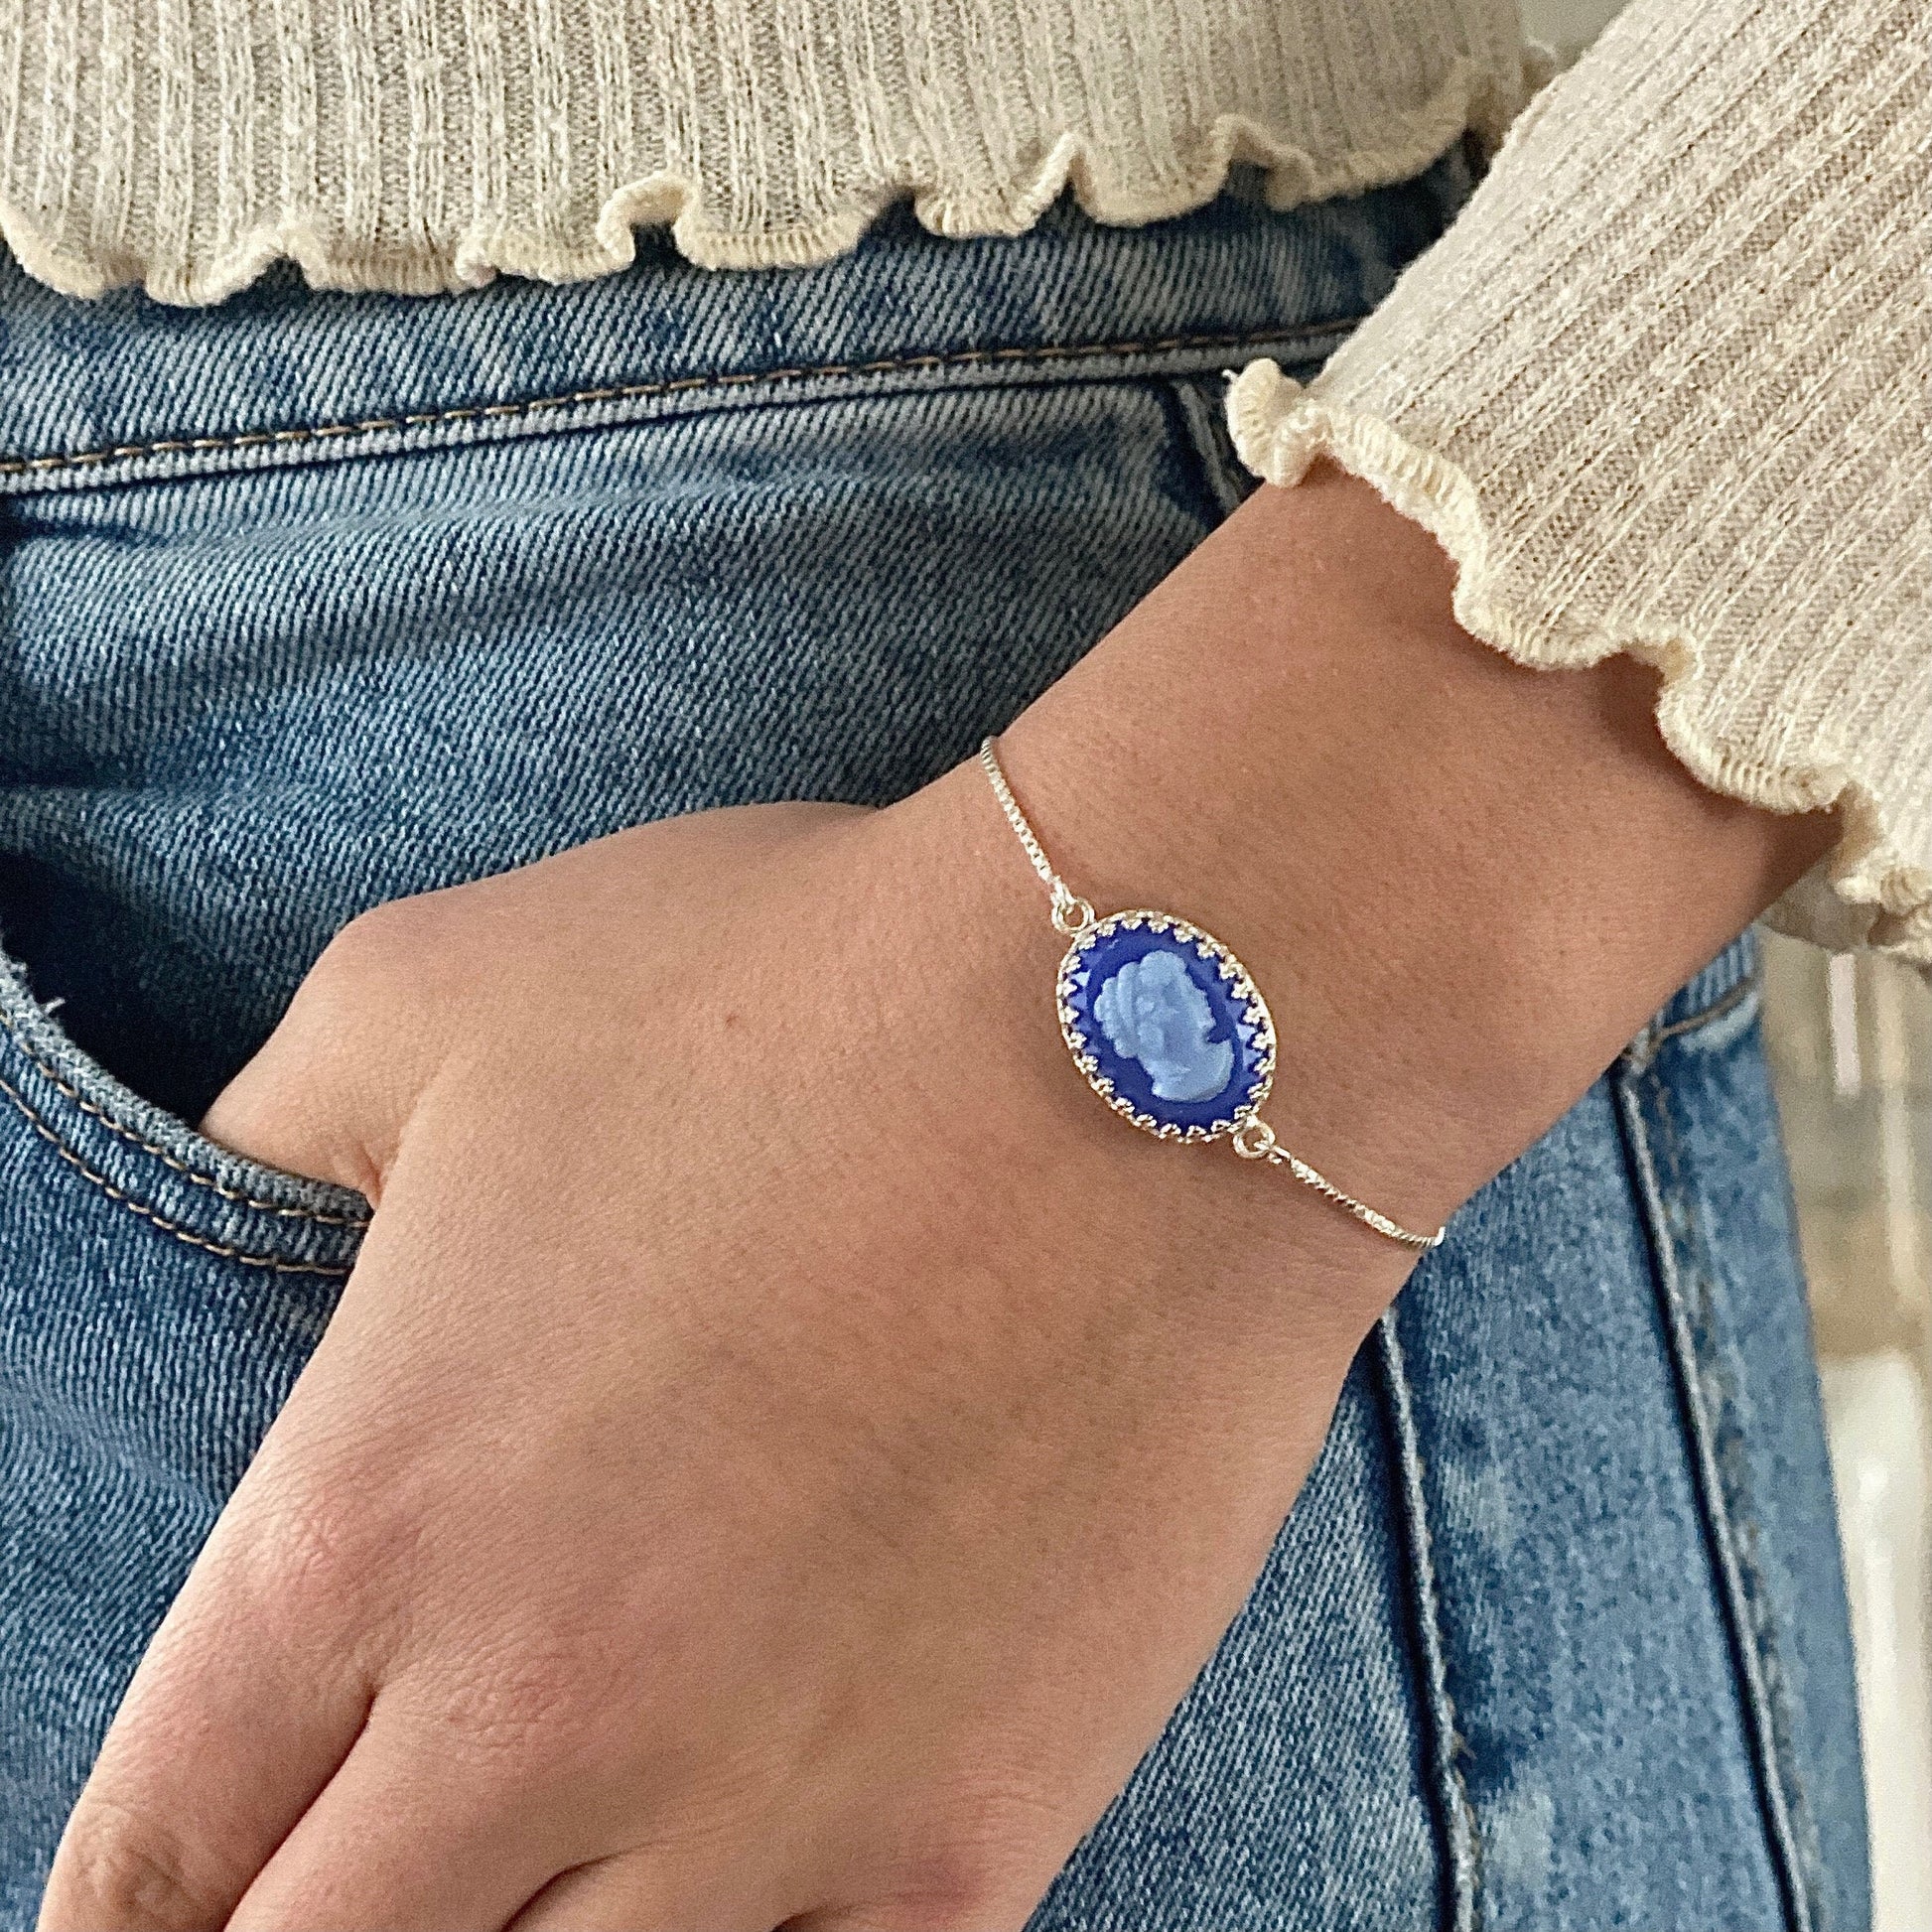 Vintage Blue Glass Cameo Bracelet, Dainty Silver Bracelets for Women, Cameo Jewelry, Adjustable Bolo Bracelet, Unique Gifts for Women